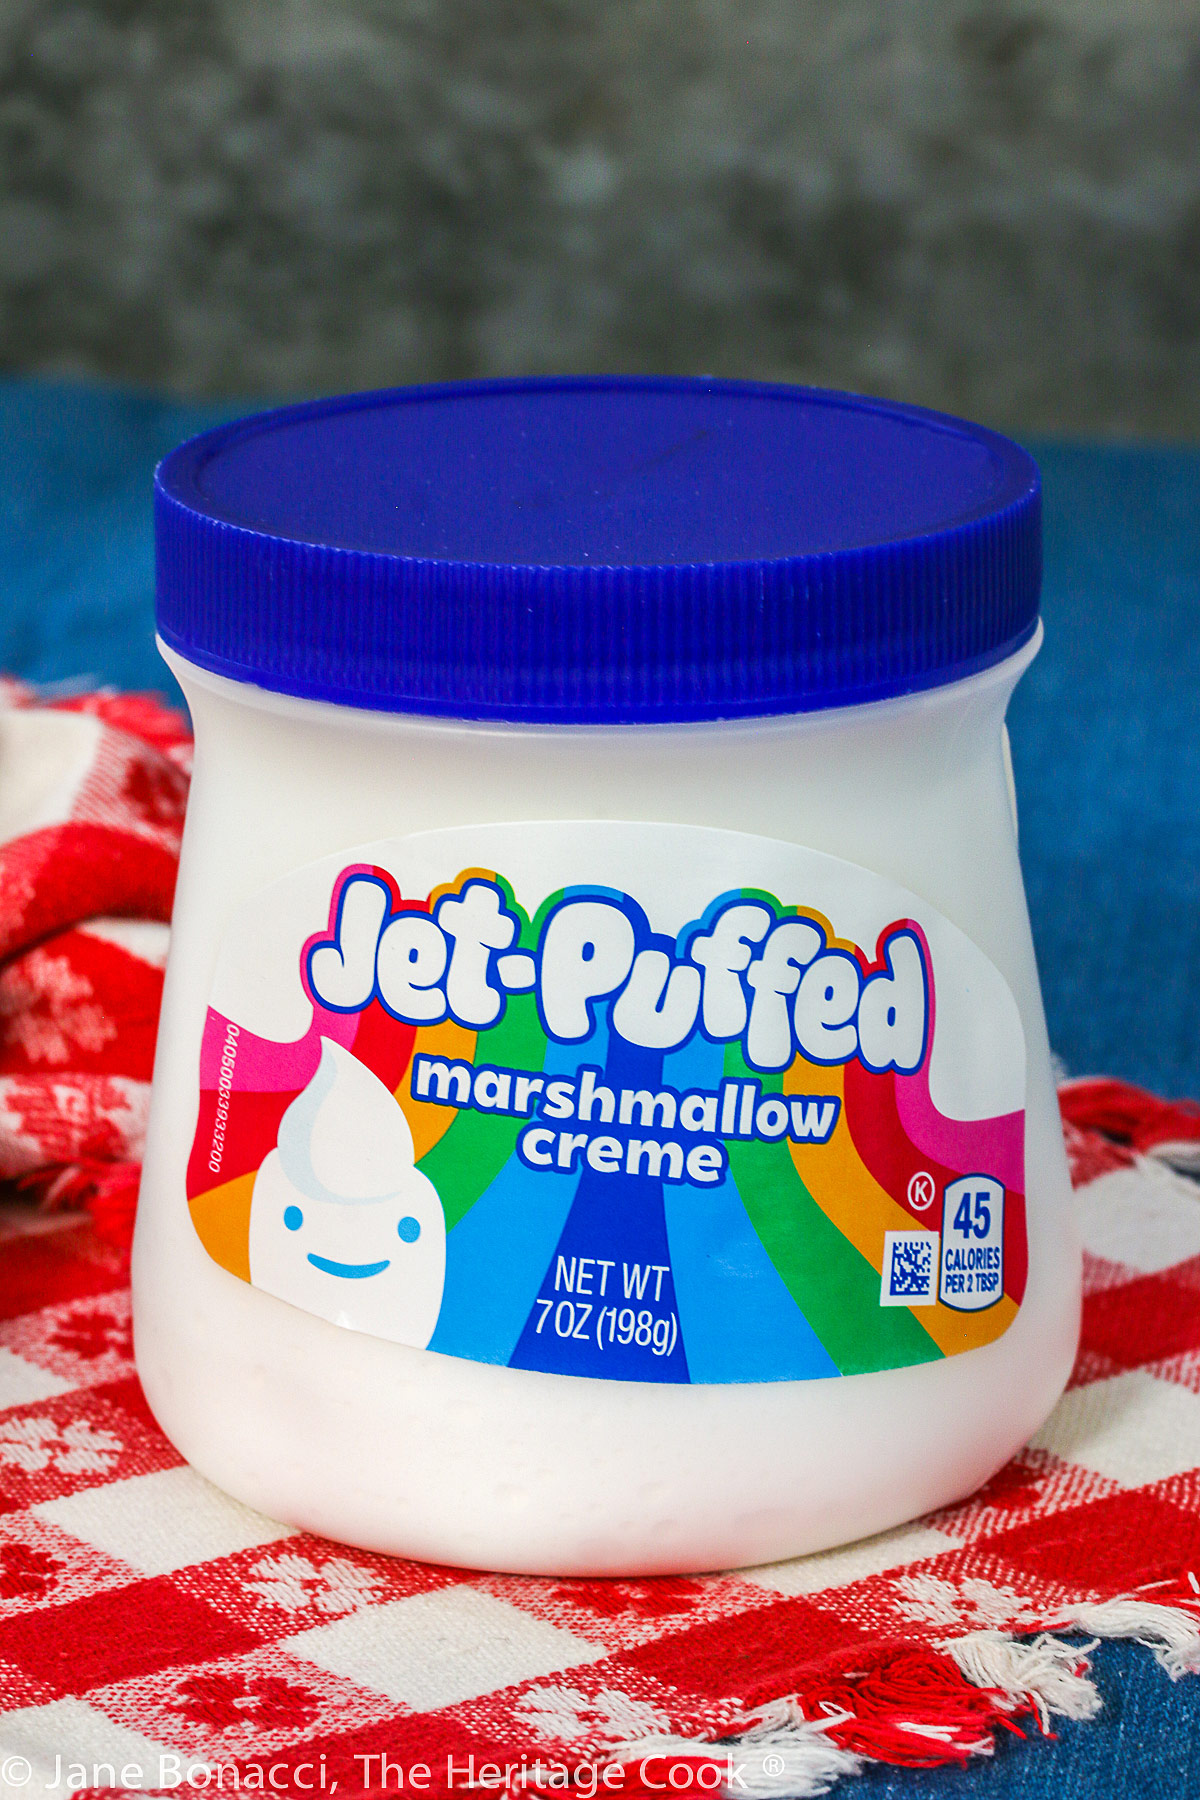 Jar of Jet Puffed Marshmallow Creme. 